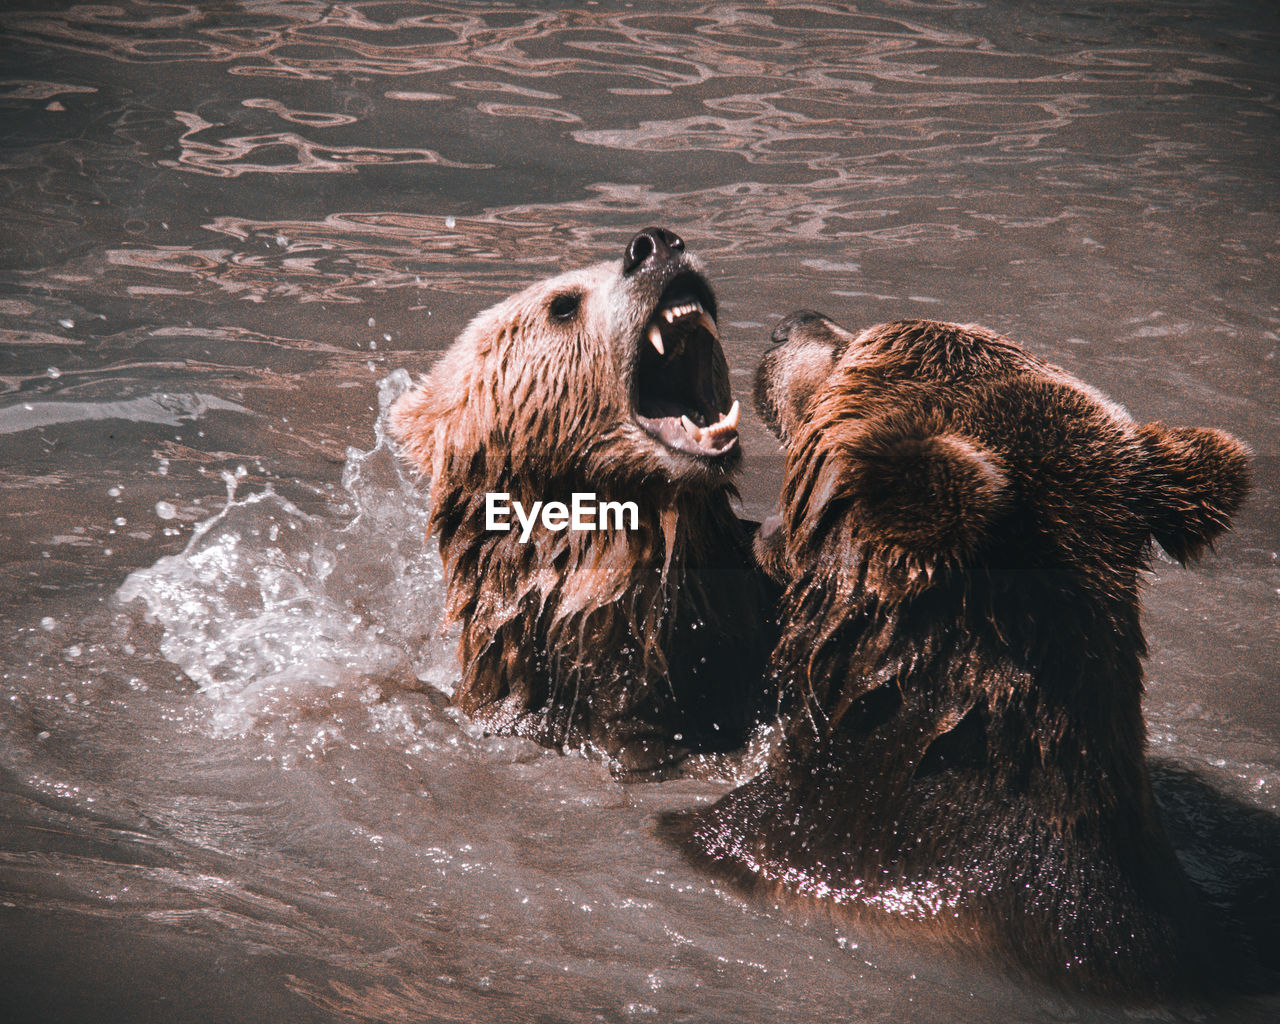 Brown bears playing